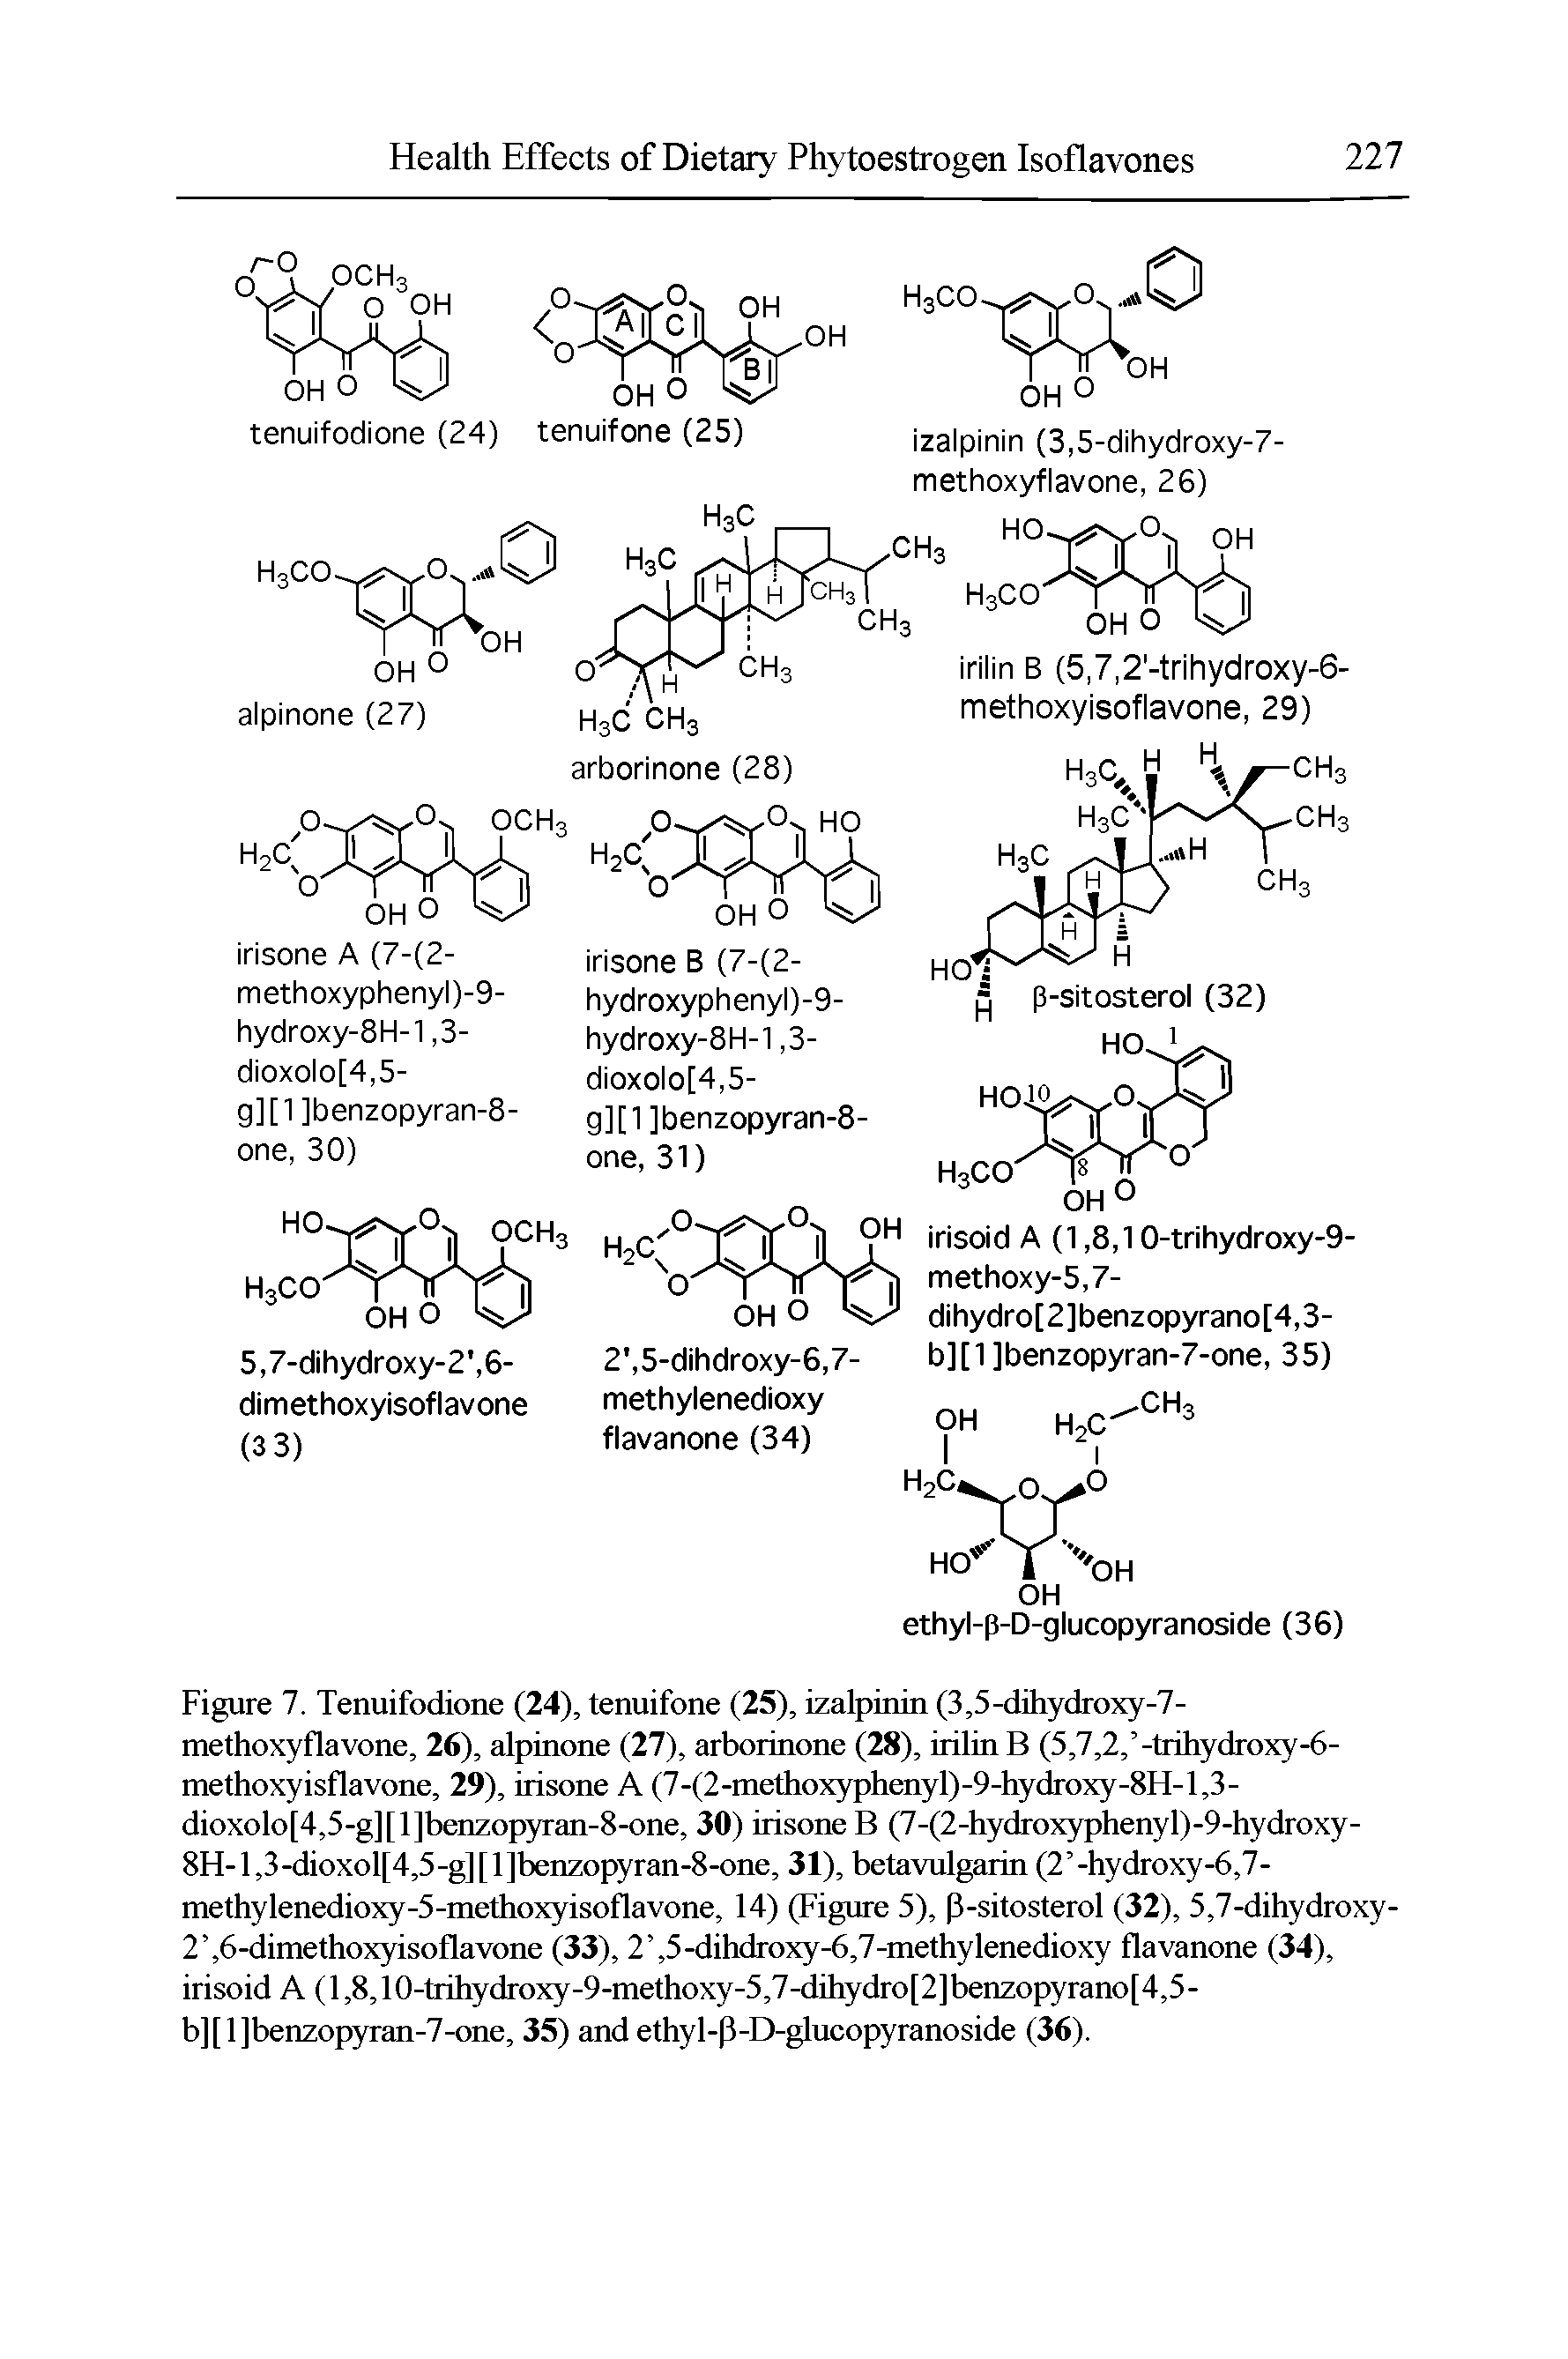 Figure 7. Tenuifodione (24), tenuifone (25), izalpinin (3,5-dihydroxy-7-methoxyflavone, 26), alpinone (27), arborinone (28), irilin B (5,7,2, -tiihydroxy-6-methoxyisflavone, 29), irisone A (7-(2-methoxyphenyl)-9-hydroxy-8H-l,3-dioxolo[4,5-g][l]benzopyran-8-one, 30) irisone B (7-(2-hydroxyphenyl)-9-hydroxy-8H-l,3-dioxol[4,5-g][l]tenzopyran-8-one, 31), betavulgarin (2 -hydroxy-6,7-methylenedioxy-5-methoxyisoflavone, 14) (Figure 5), p-sitosterol (32), 5,7-dihydroxy-2 ,6-dimethoxyisoflavone (33), 2 ,5-dihdroxy-6,7-methylenedioxy flavanone (34), irisoid A (l,8,10-trihydroxy-9-methoxy-5,7-dihydro[2]benzopyrano[4,5-b][l]benzopyran-7-one, 35) and ethyl-P-D-gJueopyranoside (36).